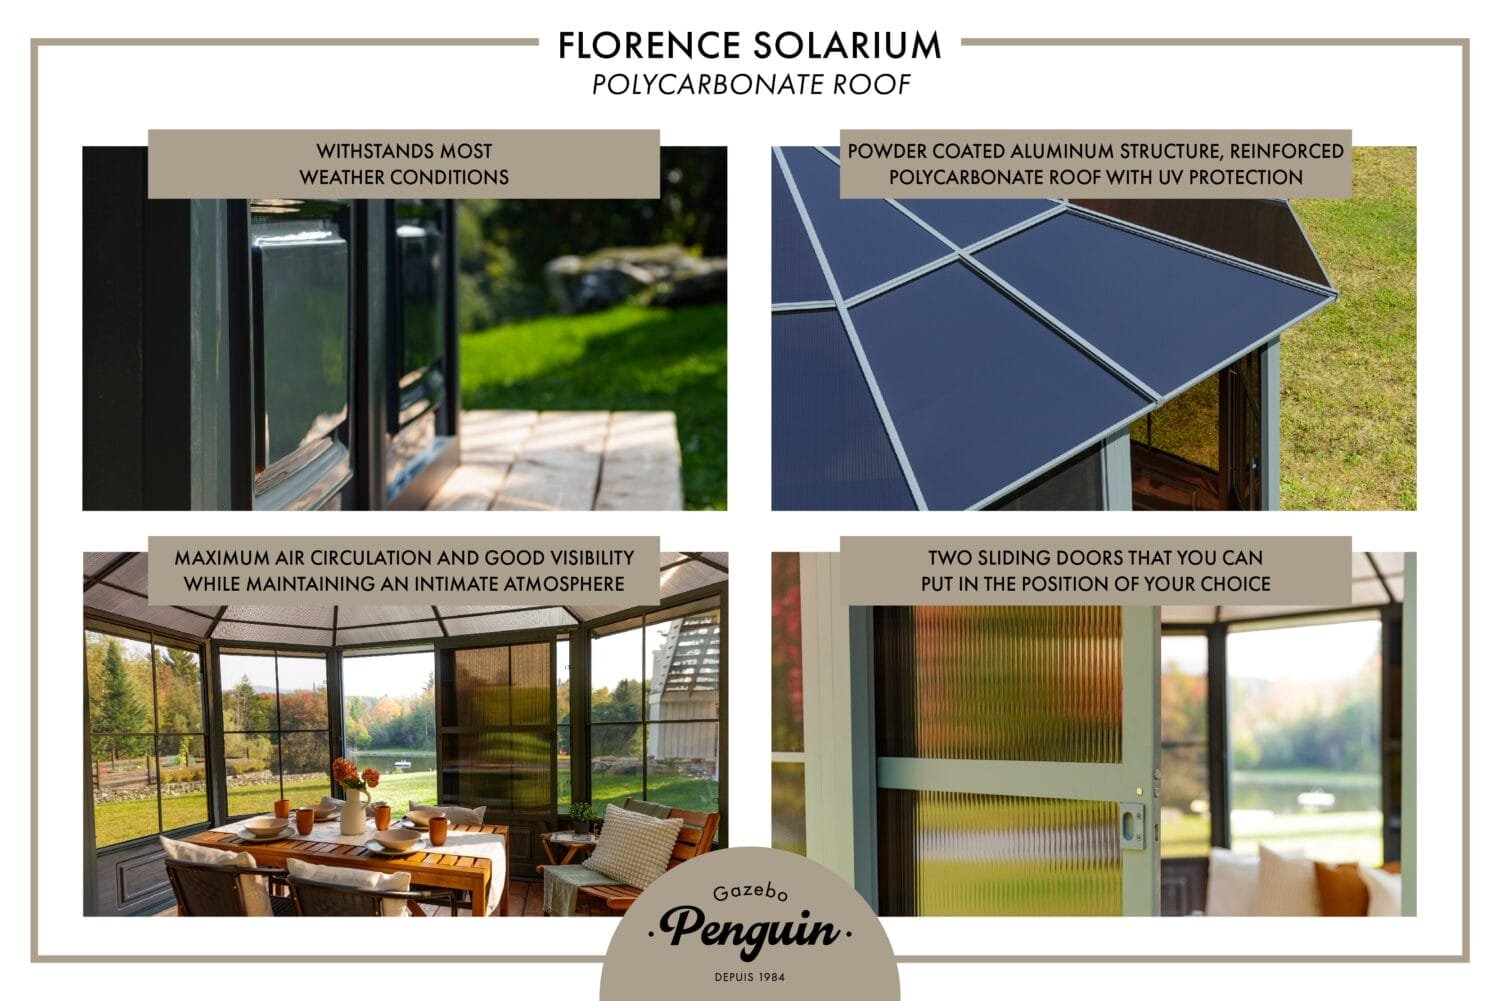 Florence Solarium 12x18 Polycarbonate Roof 41218 12 060051019031 (9)